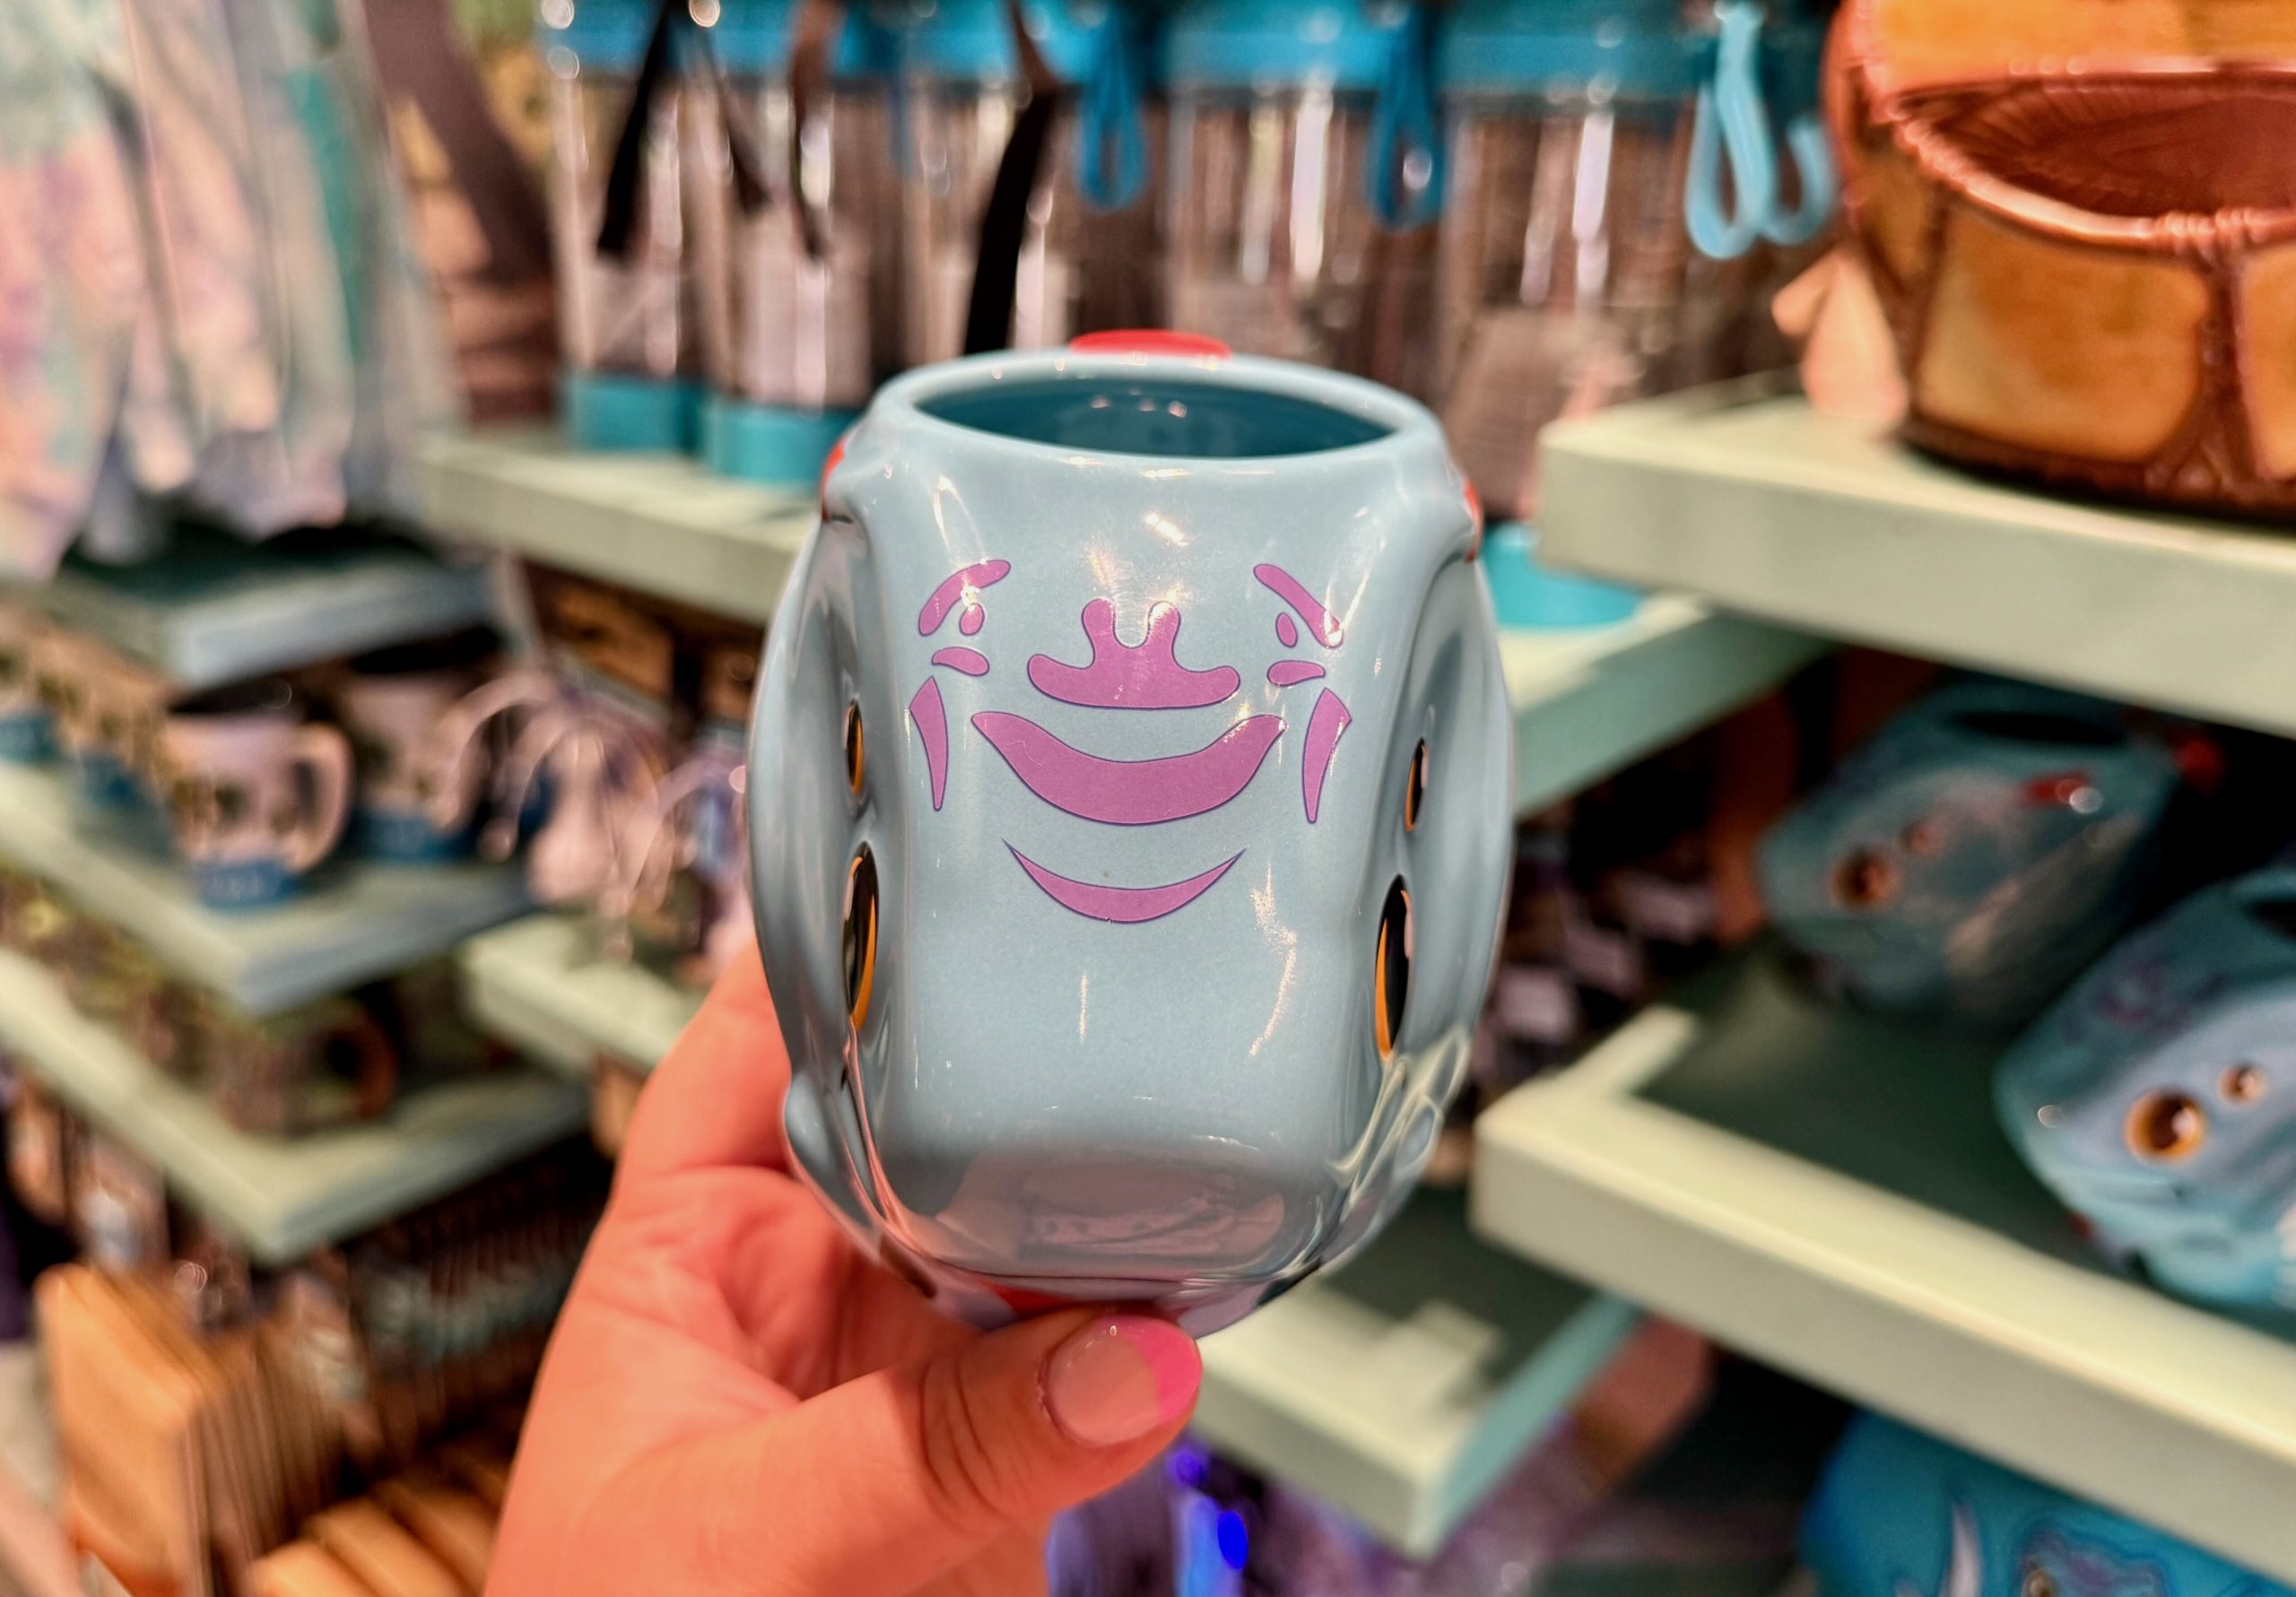 Avatar Mugs at Island Mercantile in Disney's Animal Kingdom